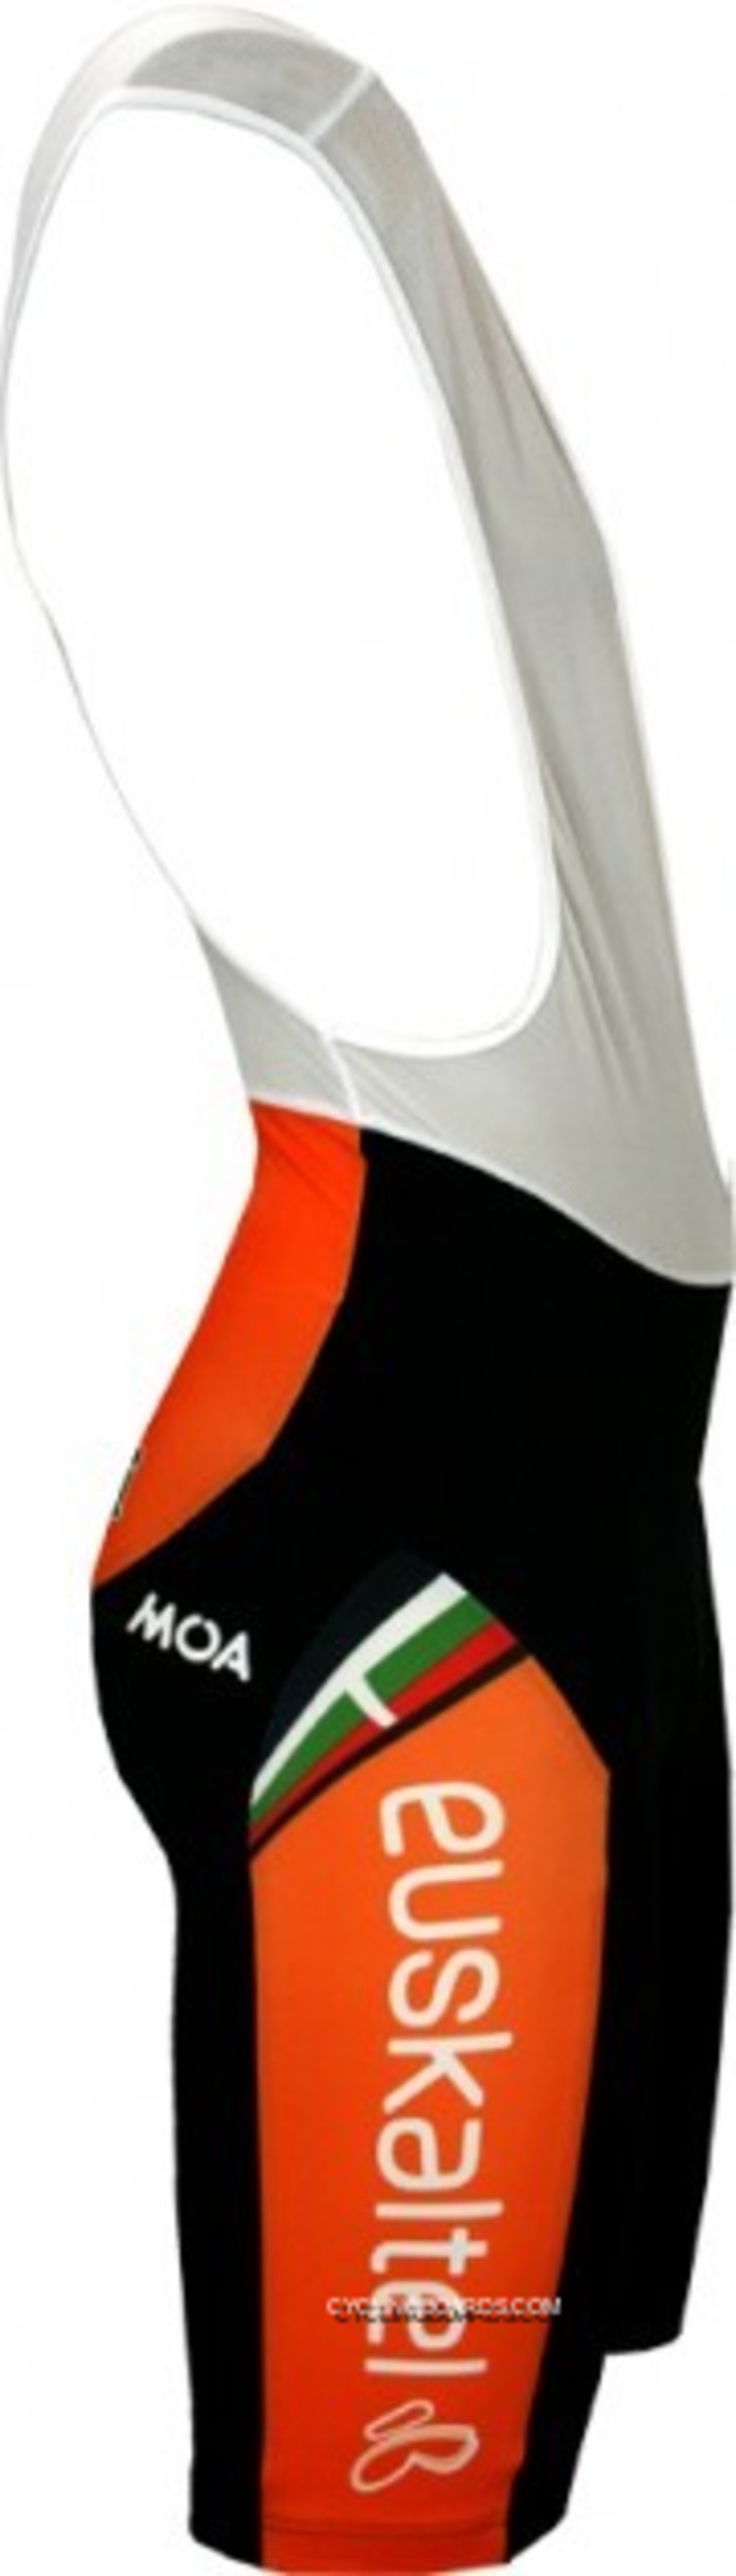 2012 Euskaltel Euskadi Bergsieger Moa Radsport-Profi-Team Bib Shorts White Tj-677-5350 For Sale